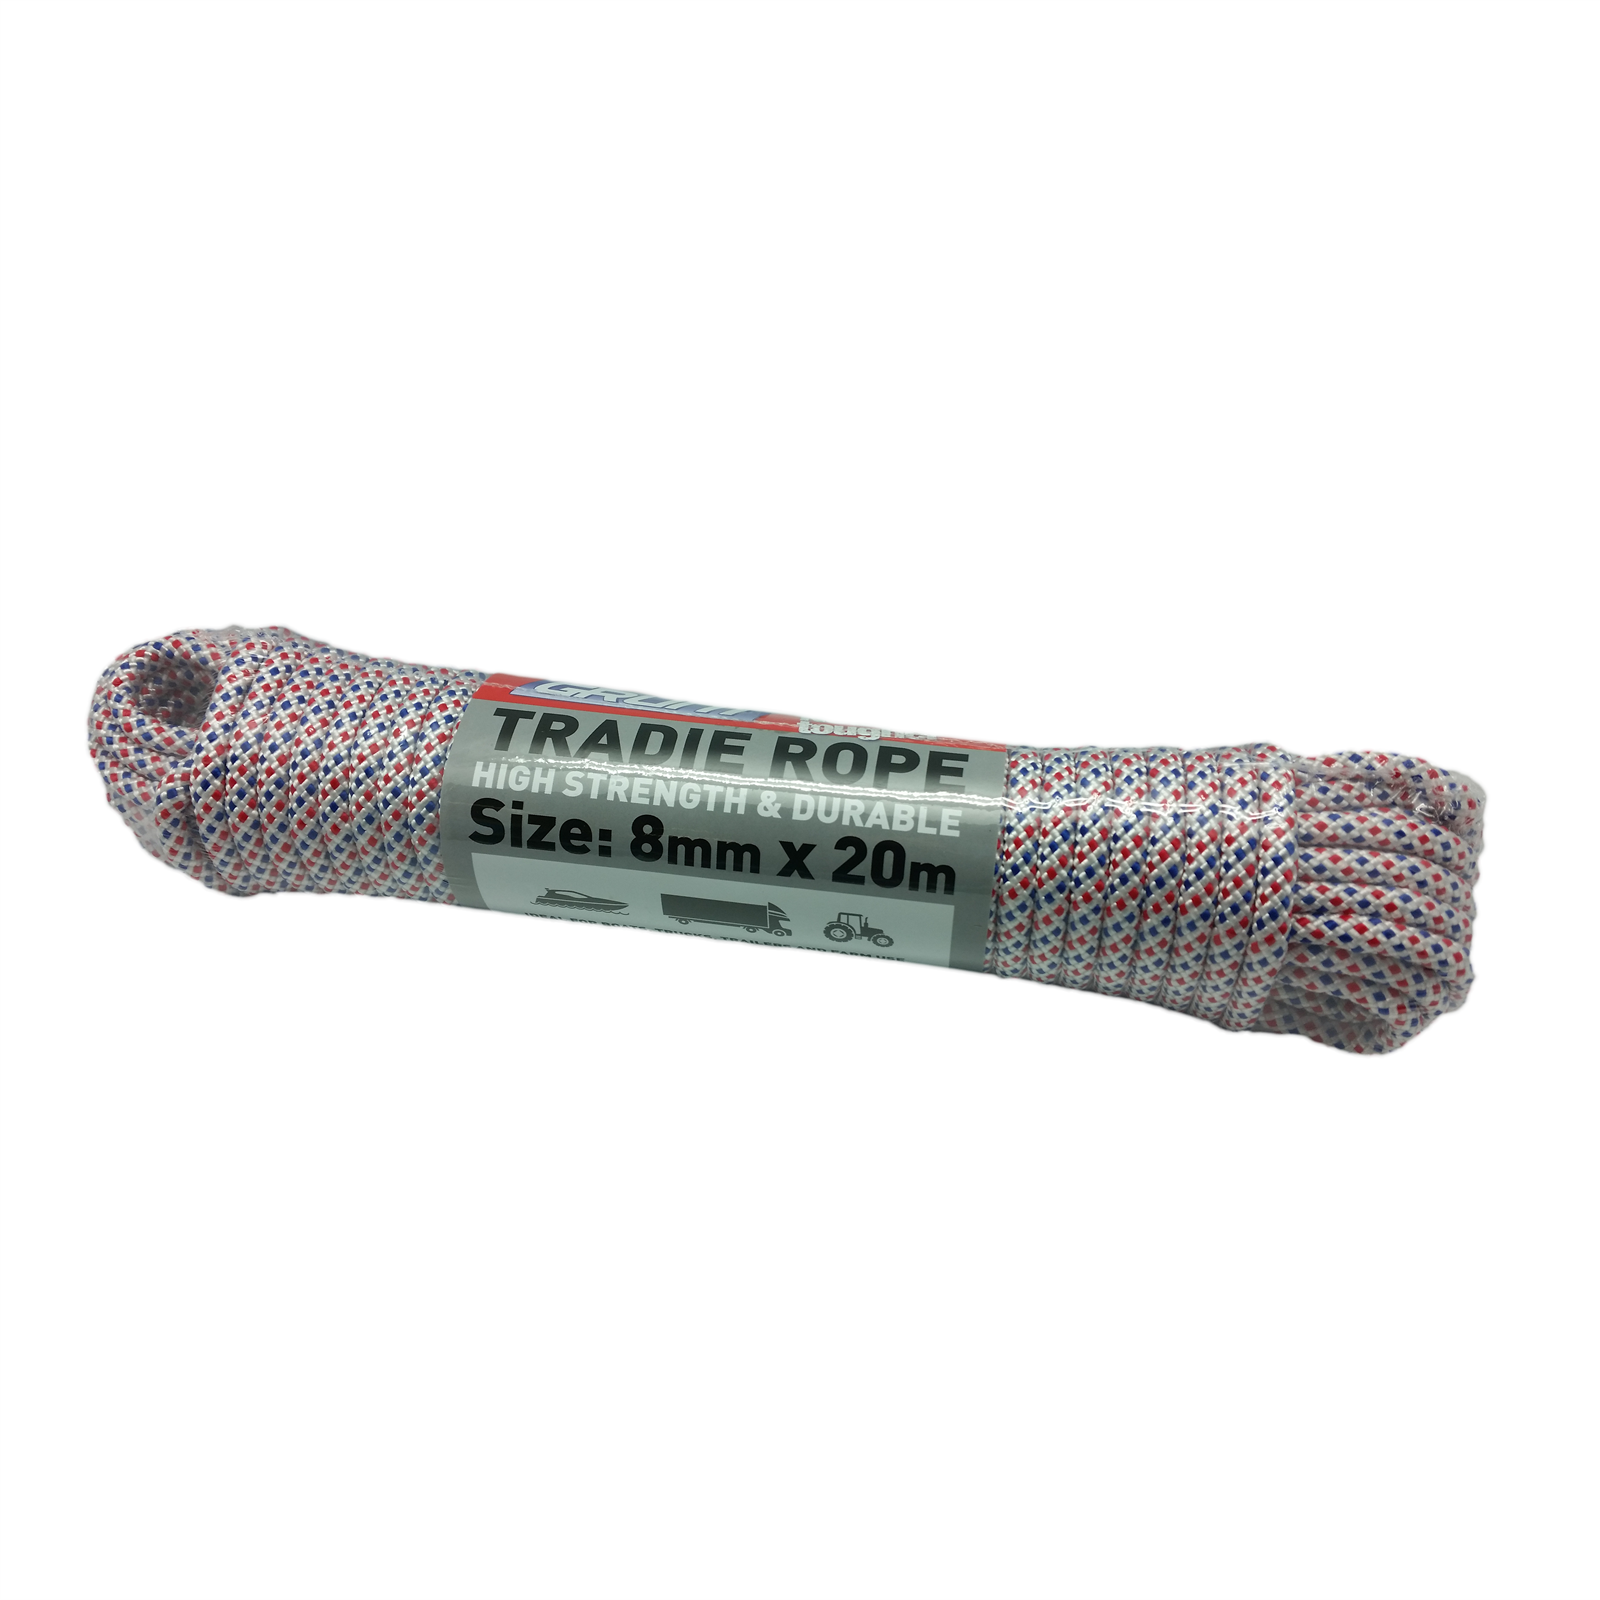 Grunt 8mm x 20m High Strength Tradies Rope